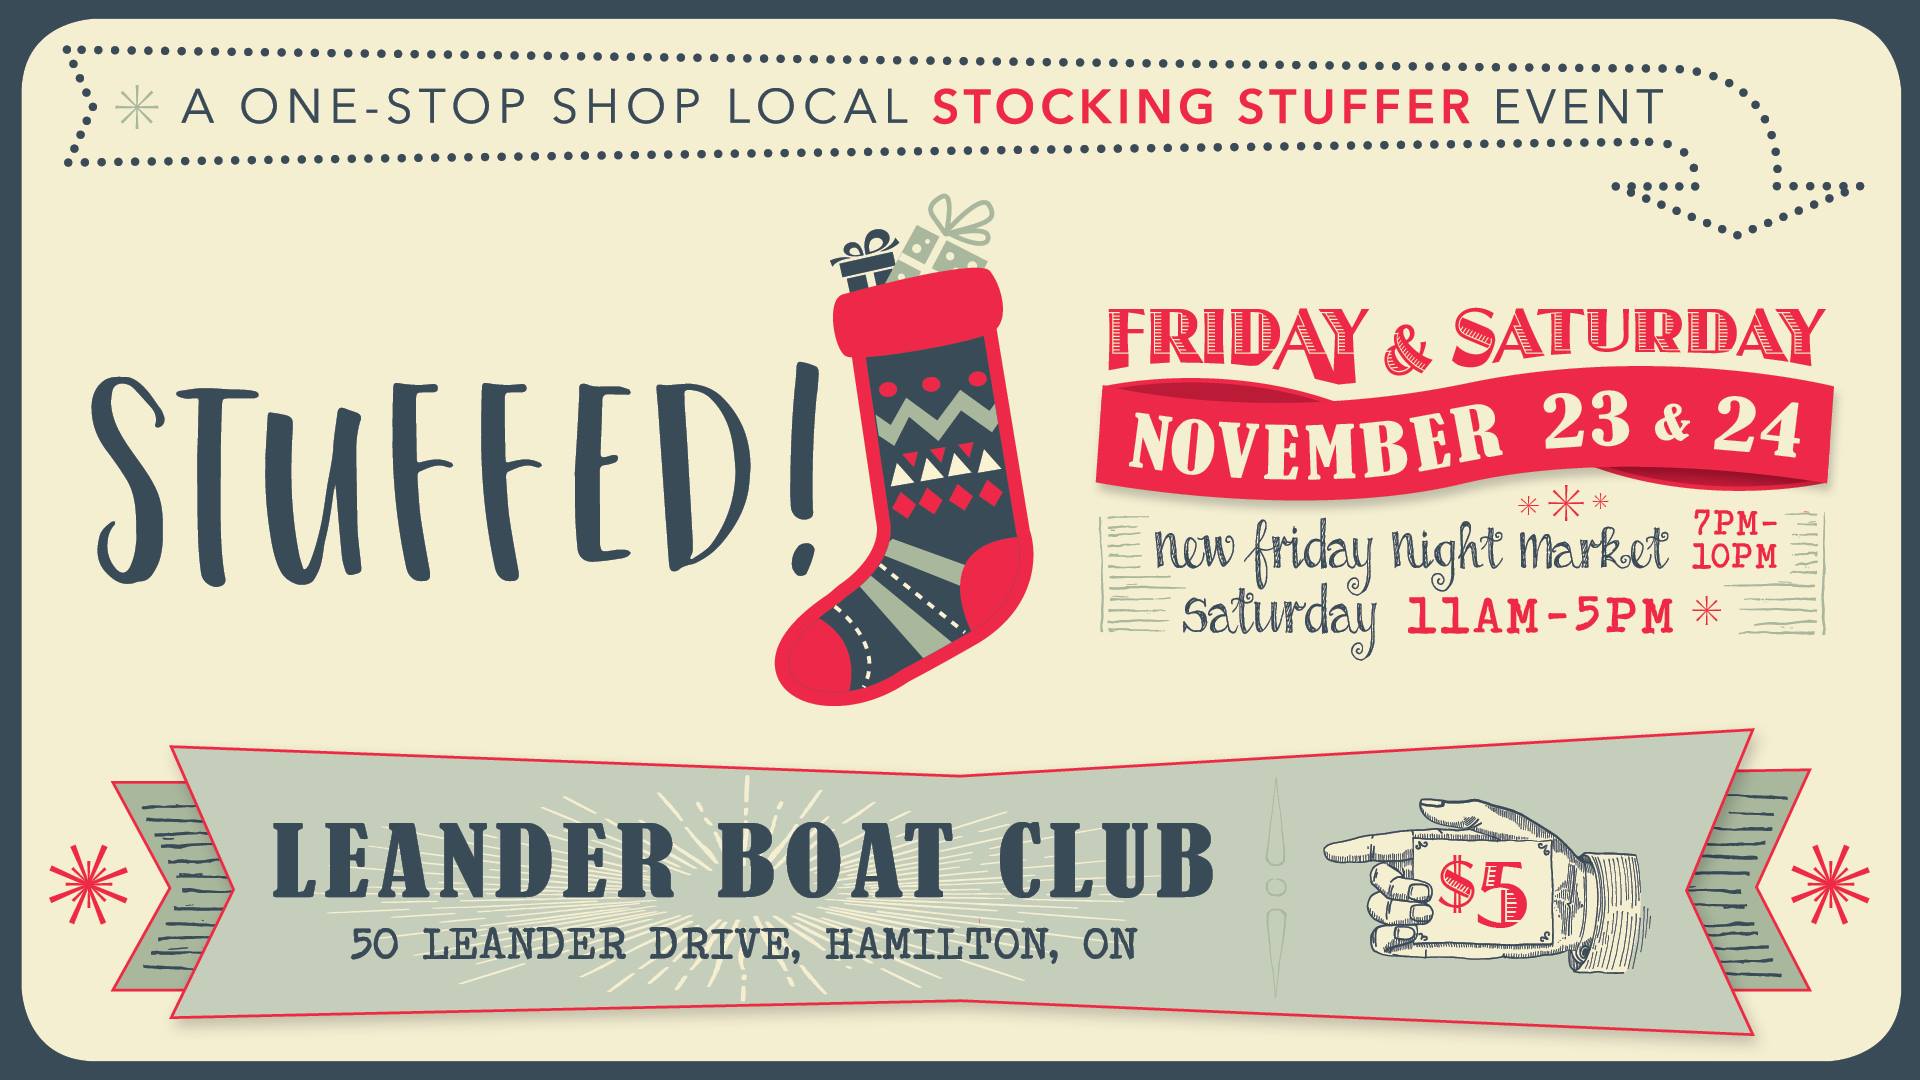 Stuffed! 2018 Holiday Shopping Event Leander Boat Club, Hamilton